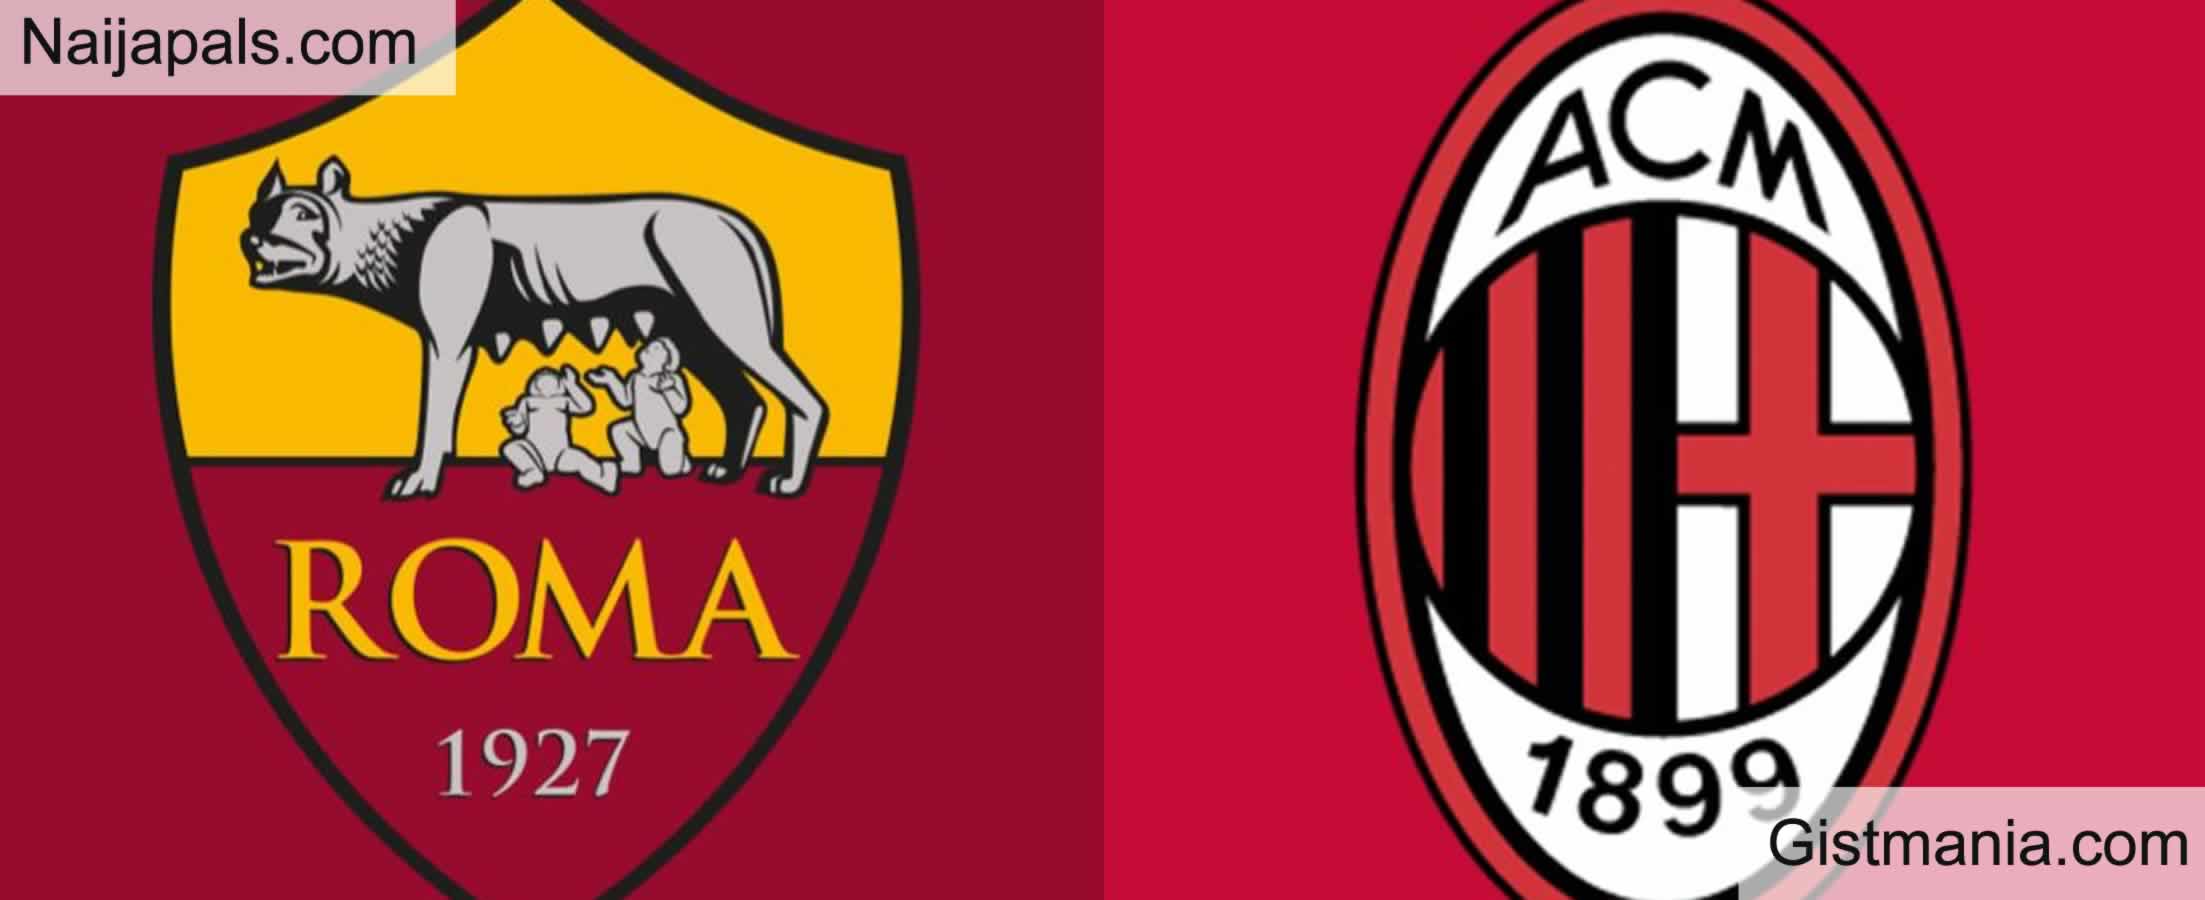 Roma v AC Milan: UEFA Europa League Q/Final Match,Team News,Goal Scorers & Stats